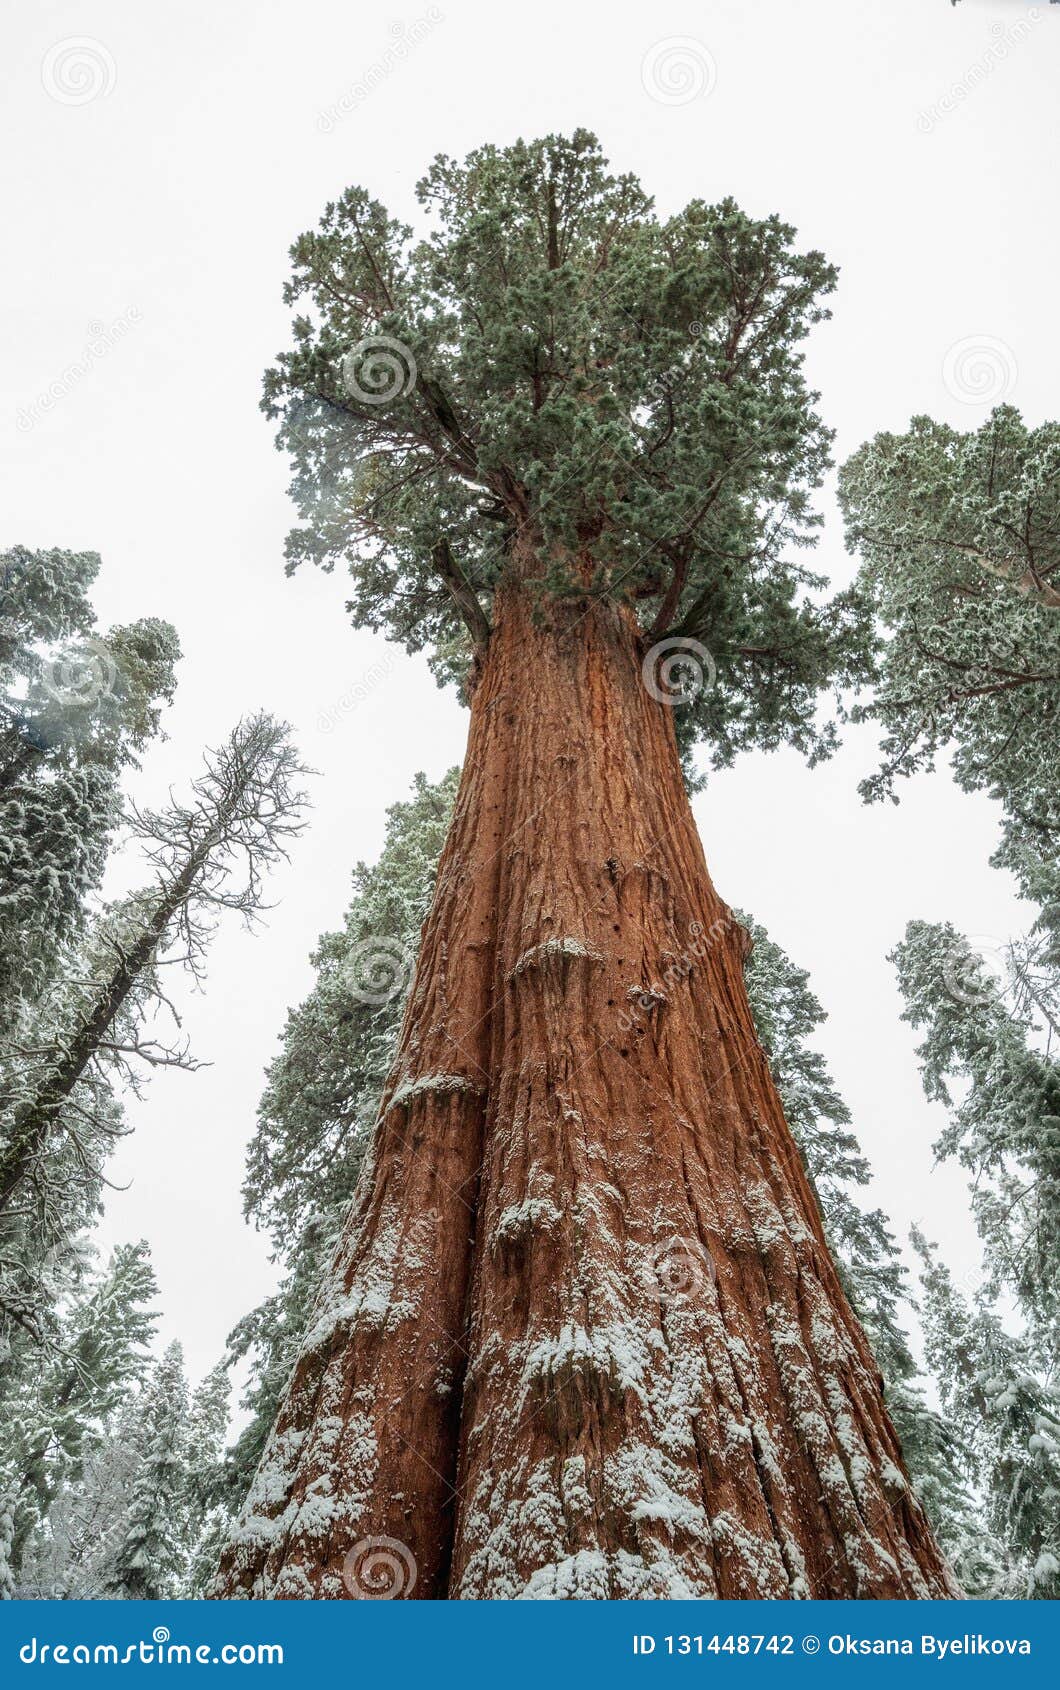 giant sequoia trees sequoiadendron giganteum, in sequoia national park during twinter, usa